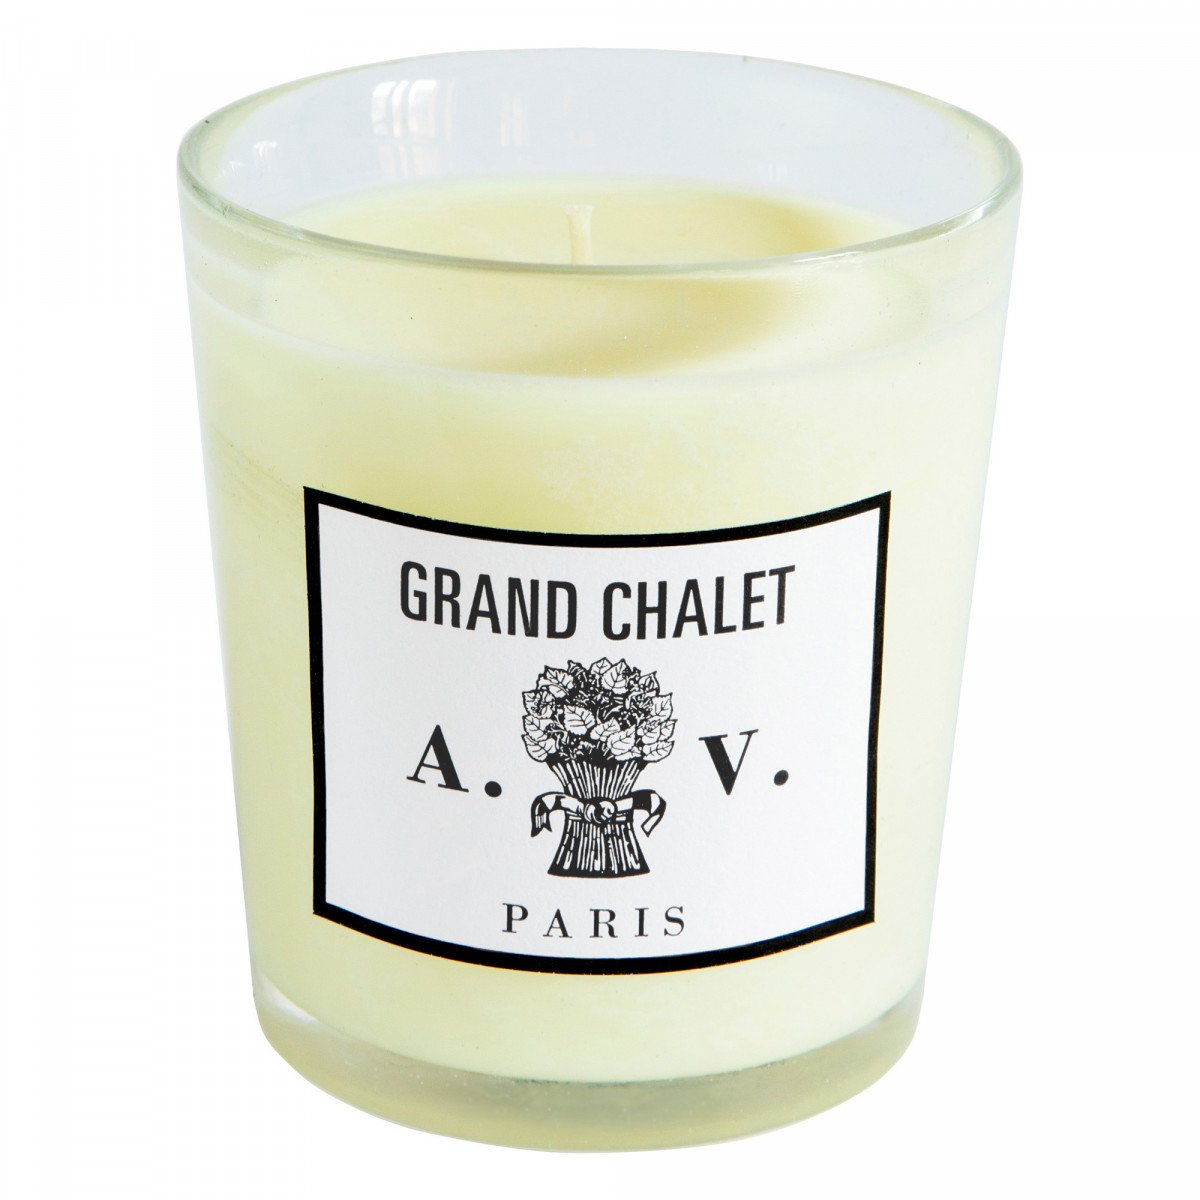 Astier de Villatte, Grand Chalet Candle